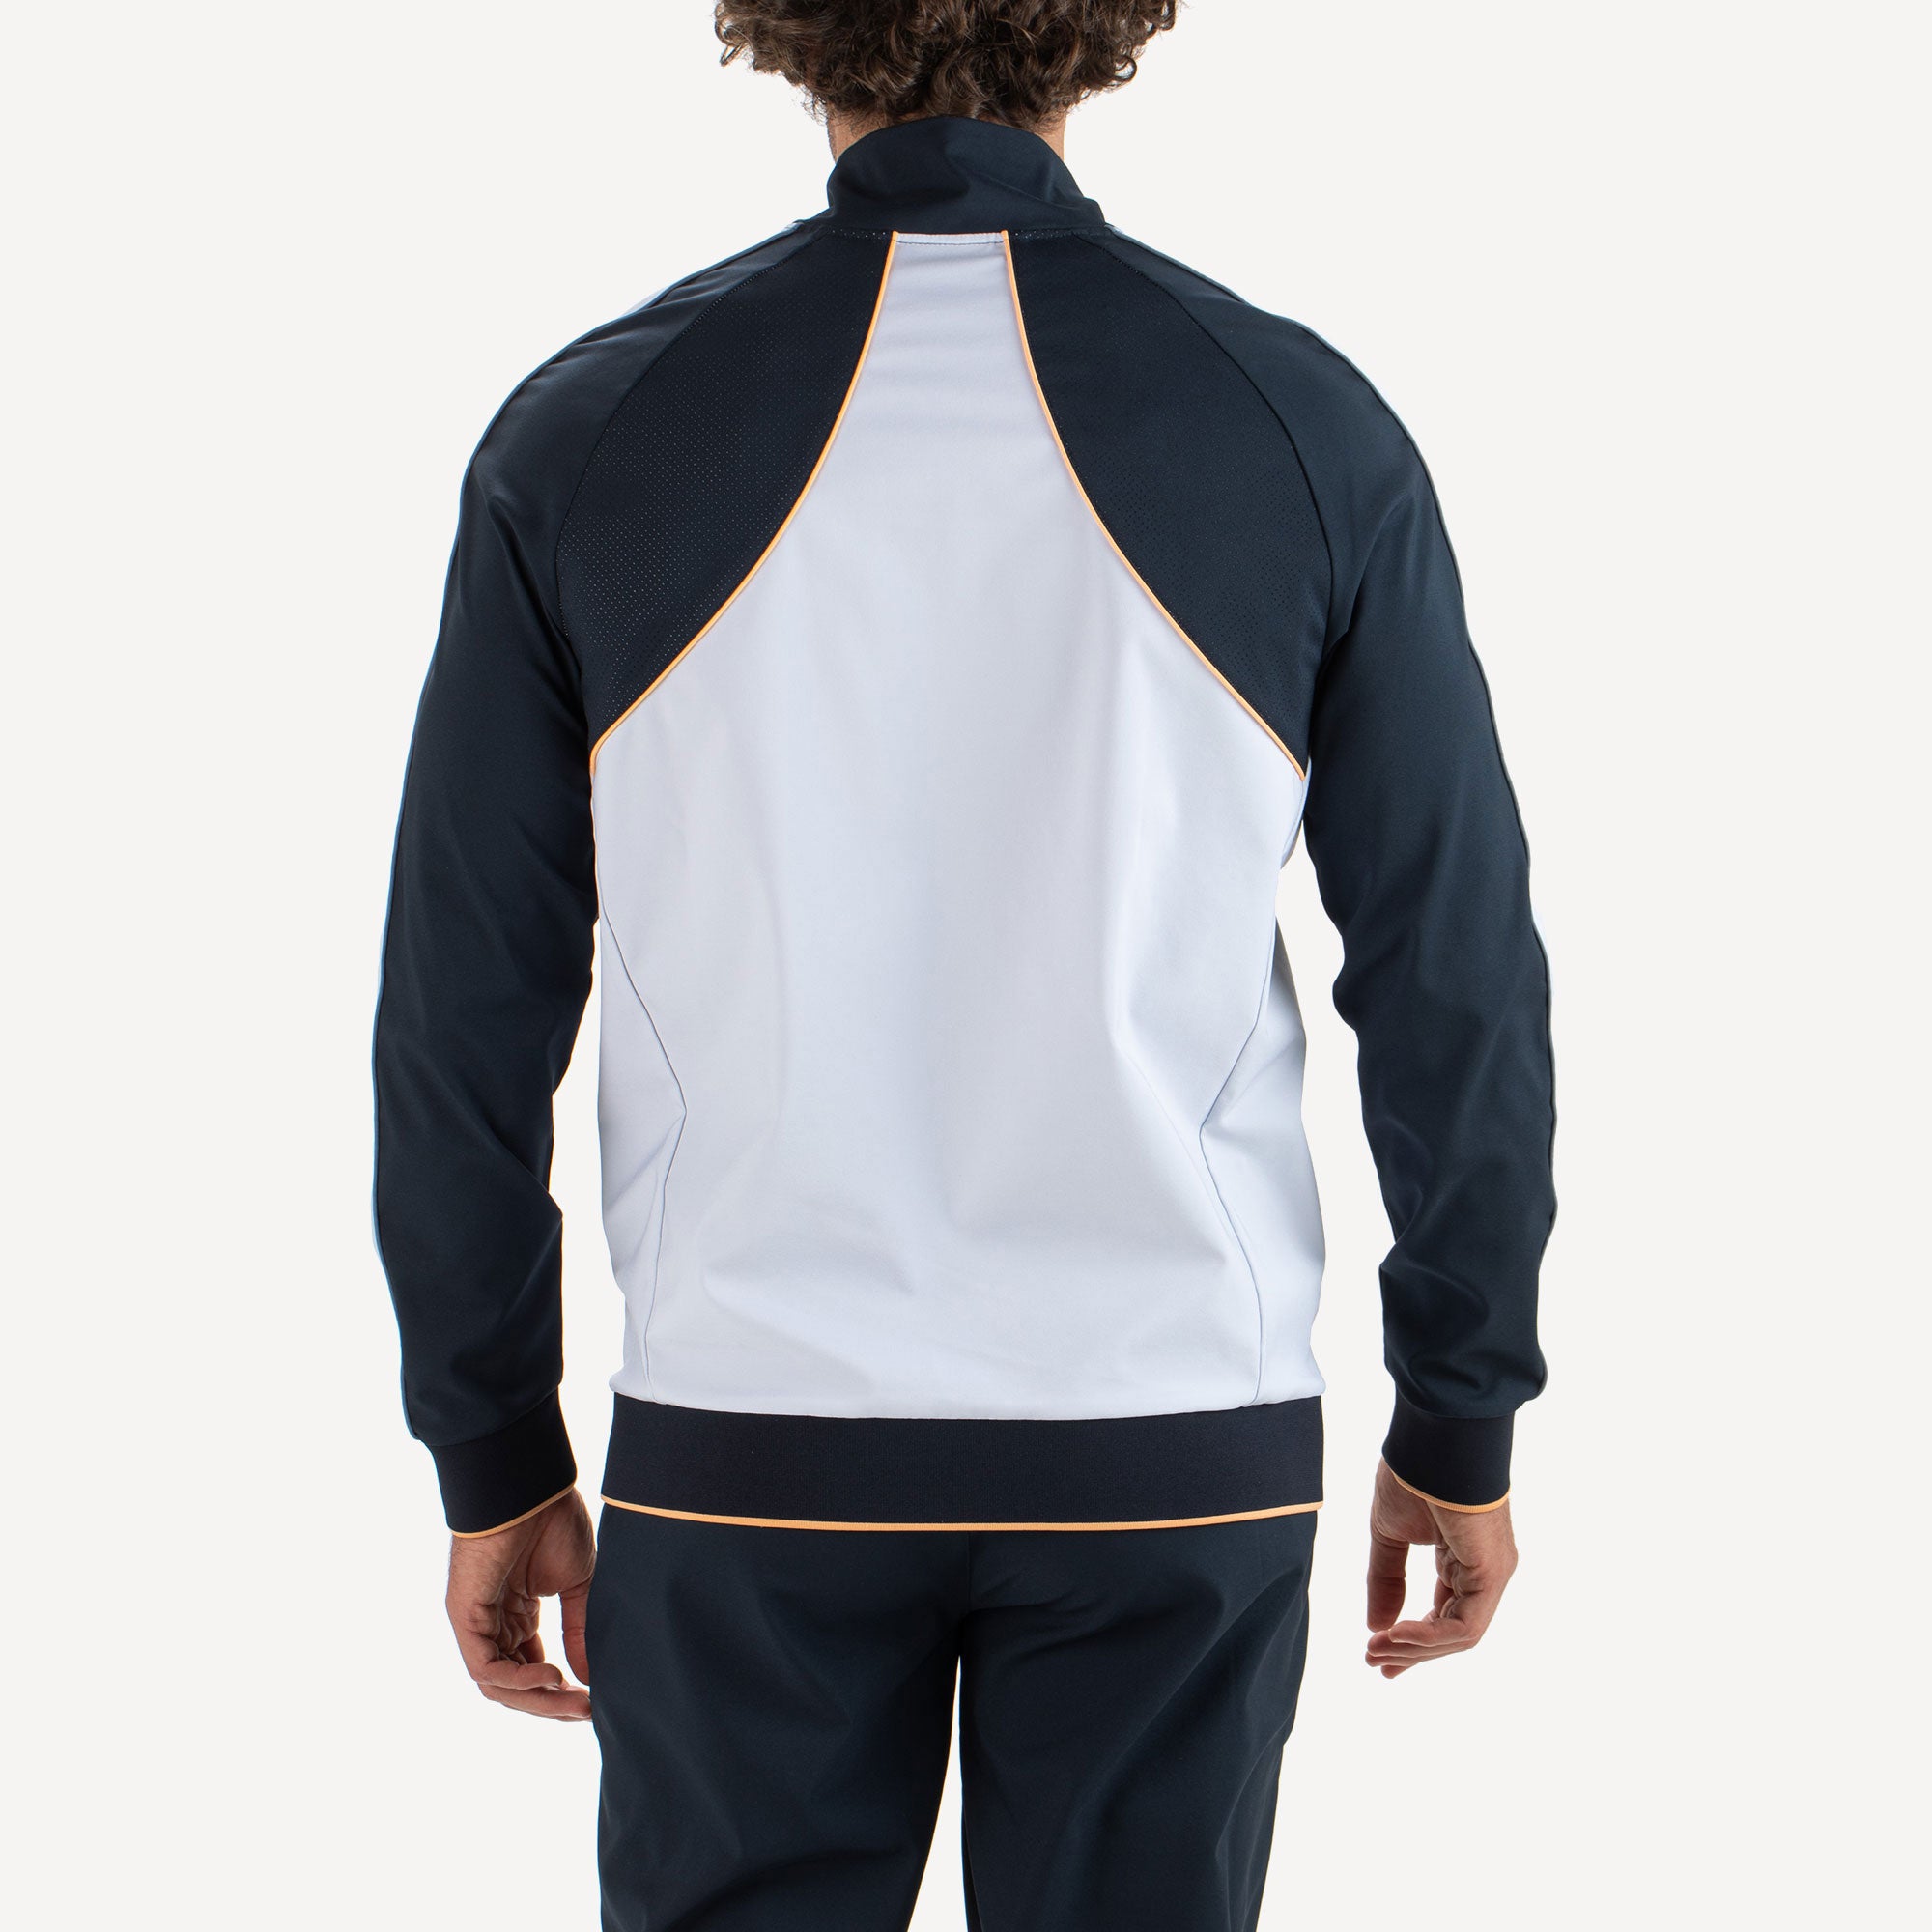 Sjeng Sports Issandro Men's Tennis Jacket White (2)